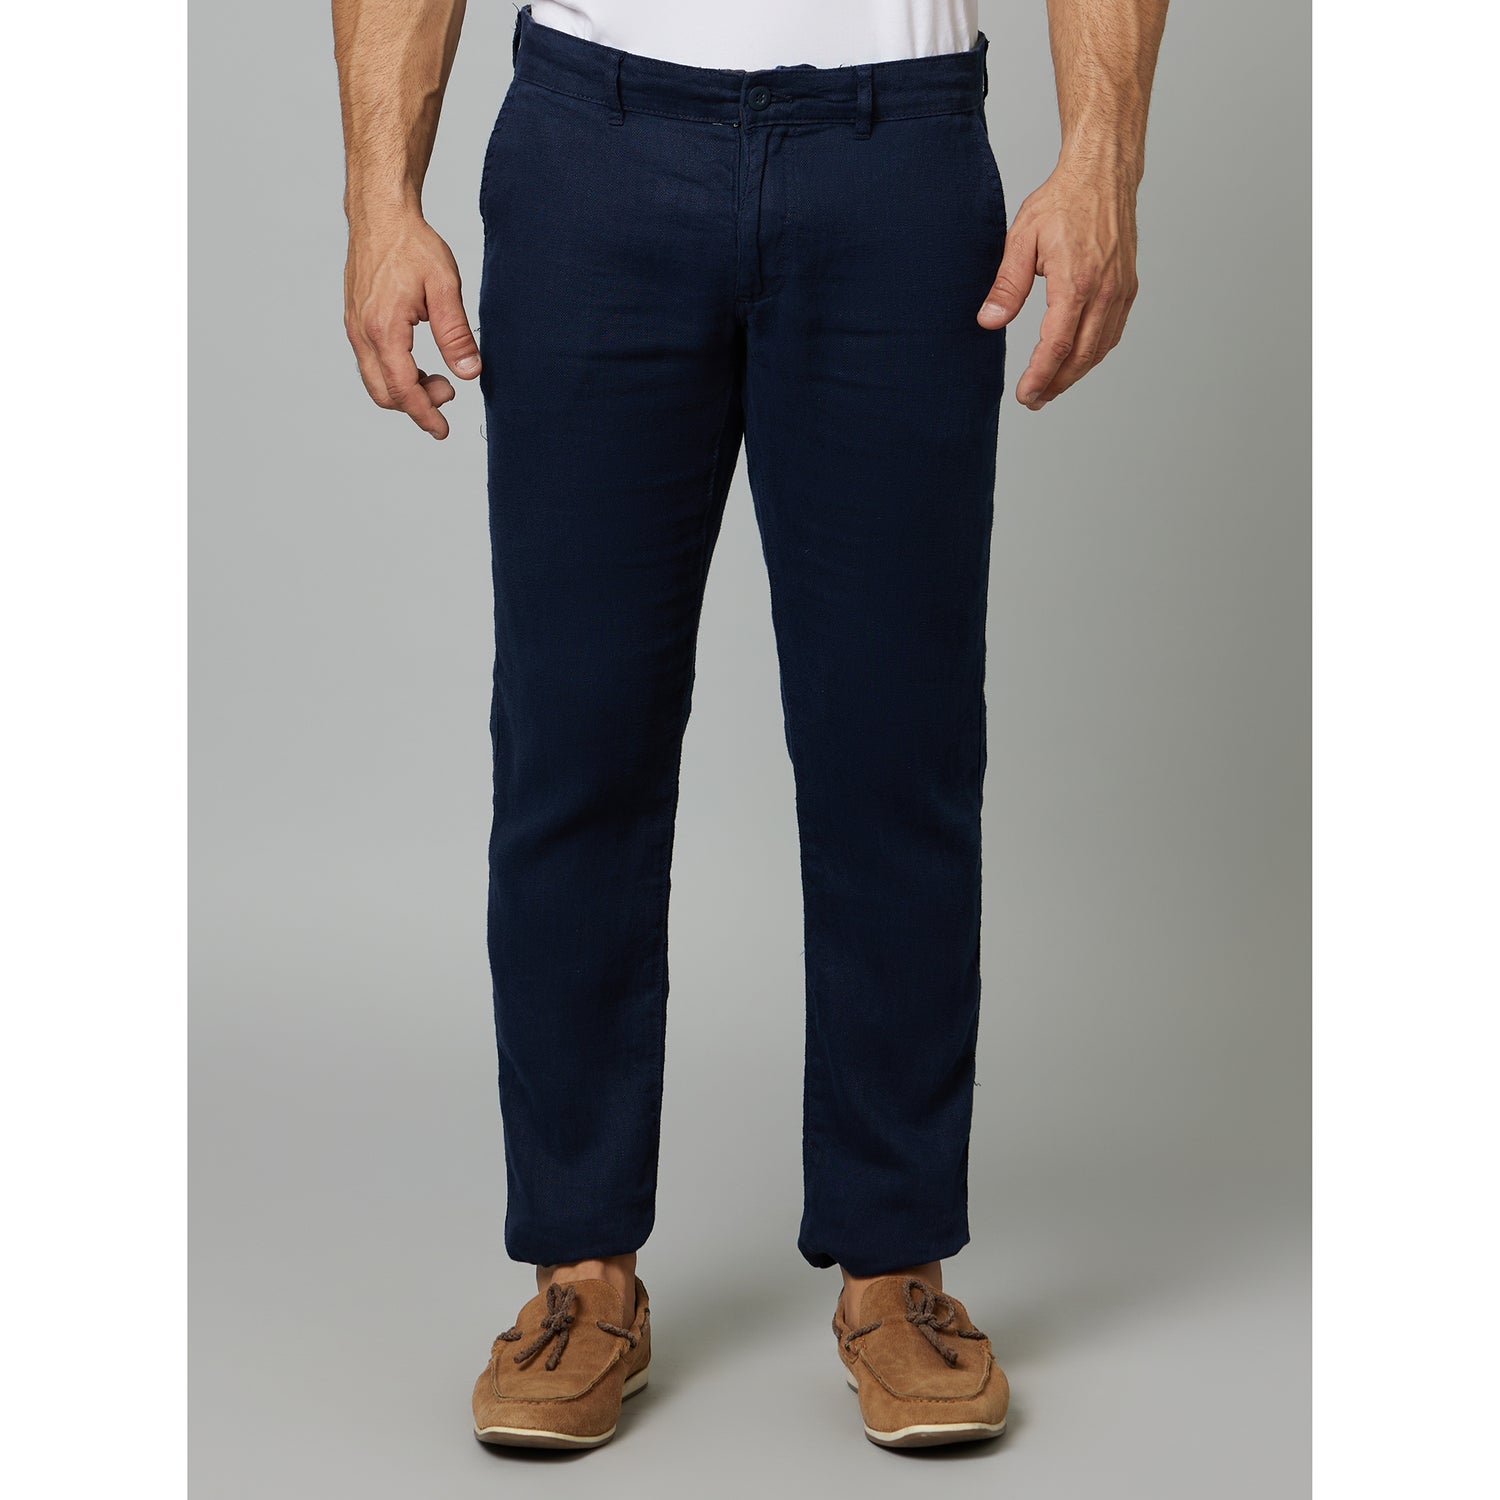 Navy Blue Mid-Rise Slim Fit Linen Trousers (DOFLEXIN)